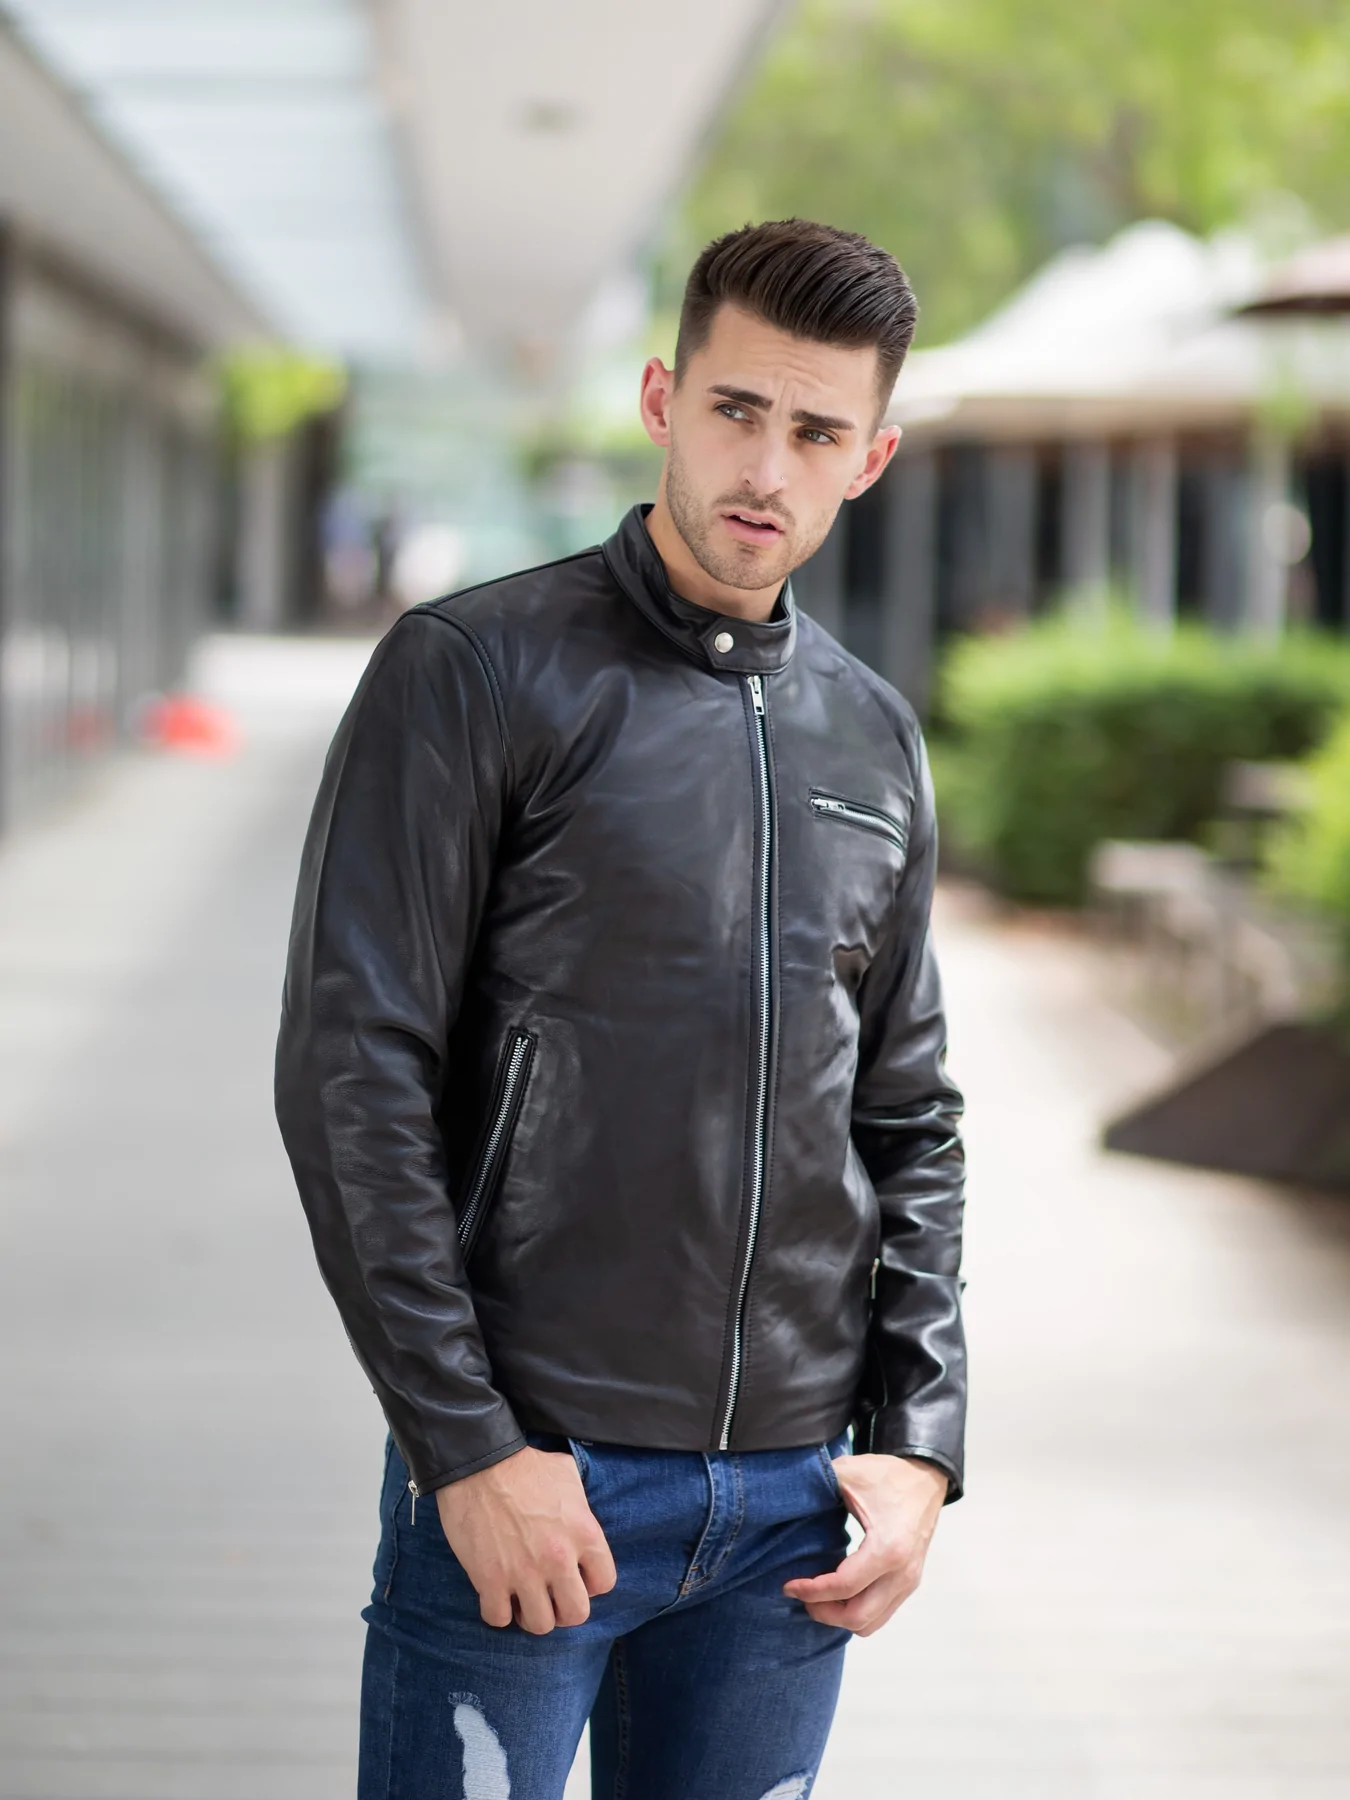 Men's Supreme Leather Jackets